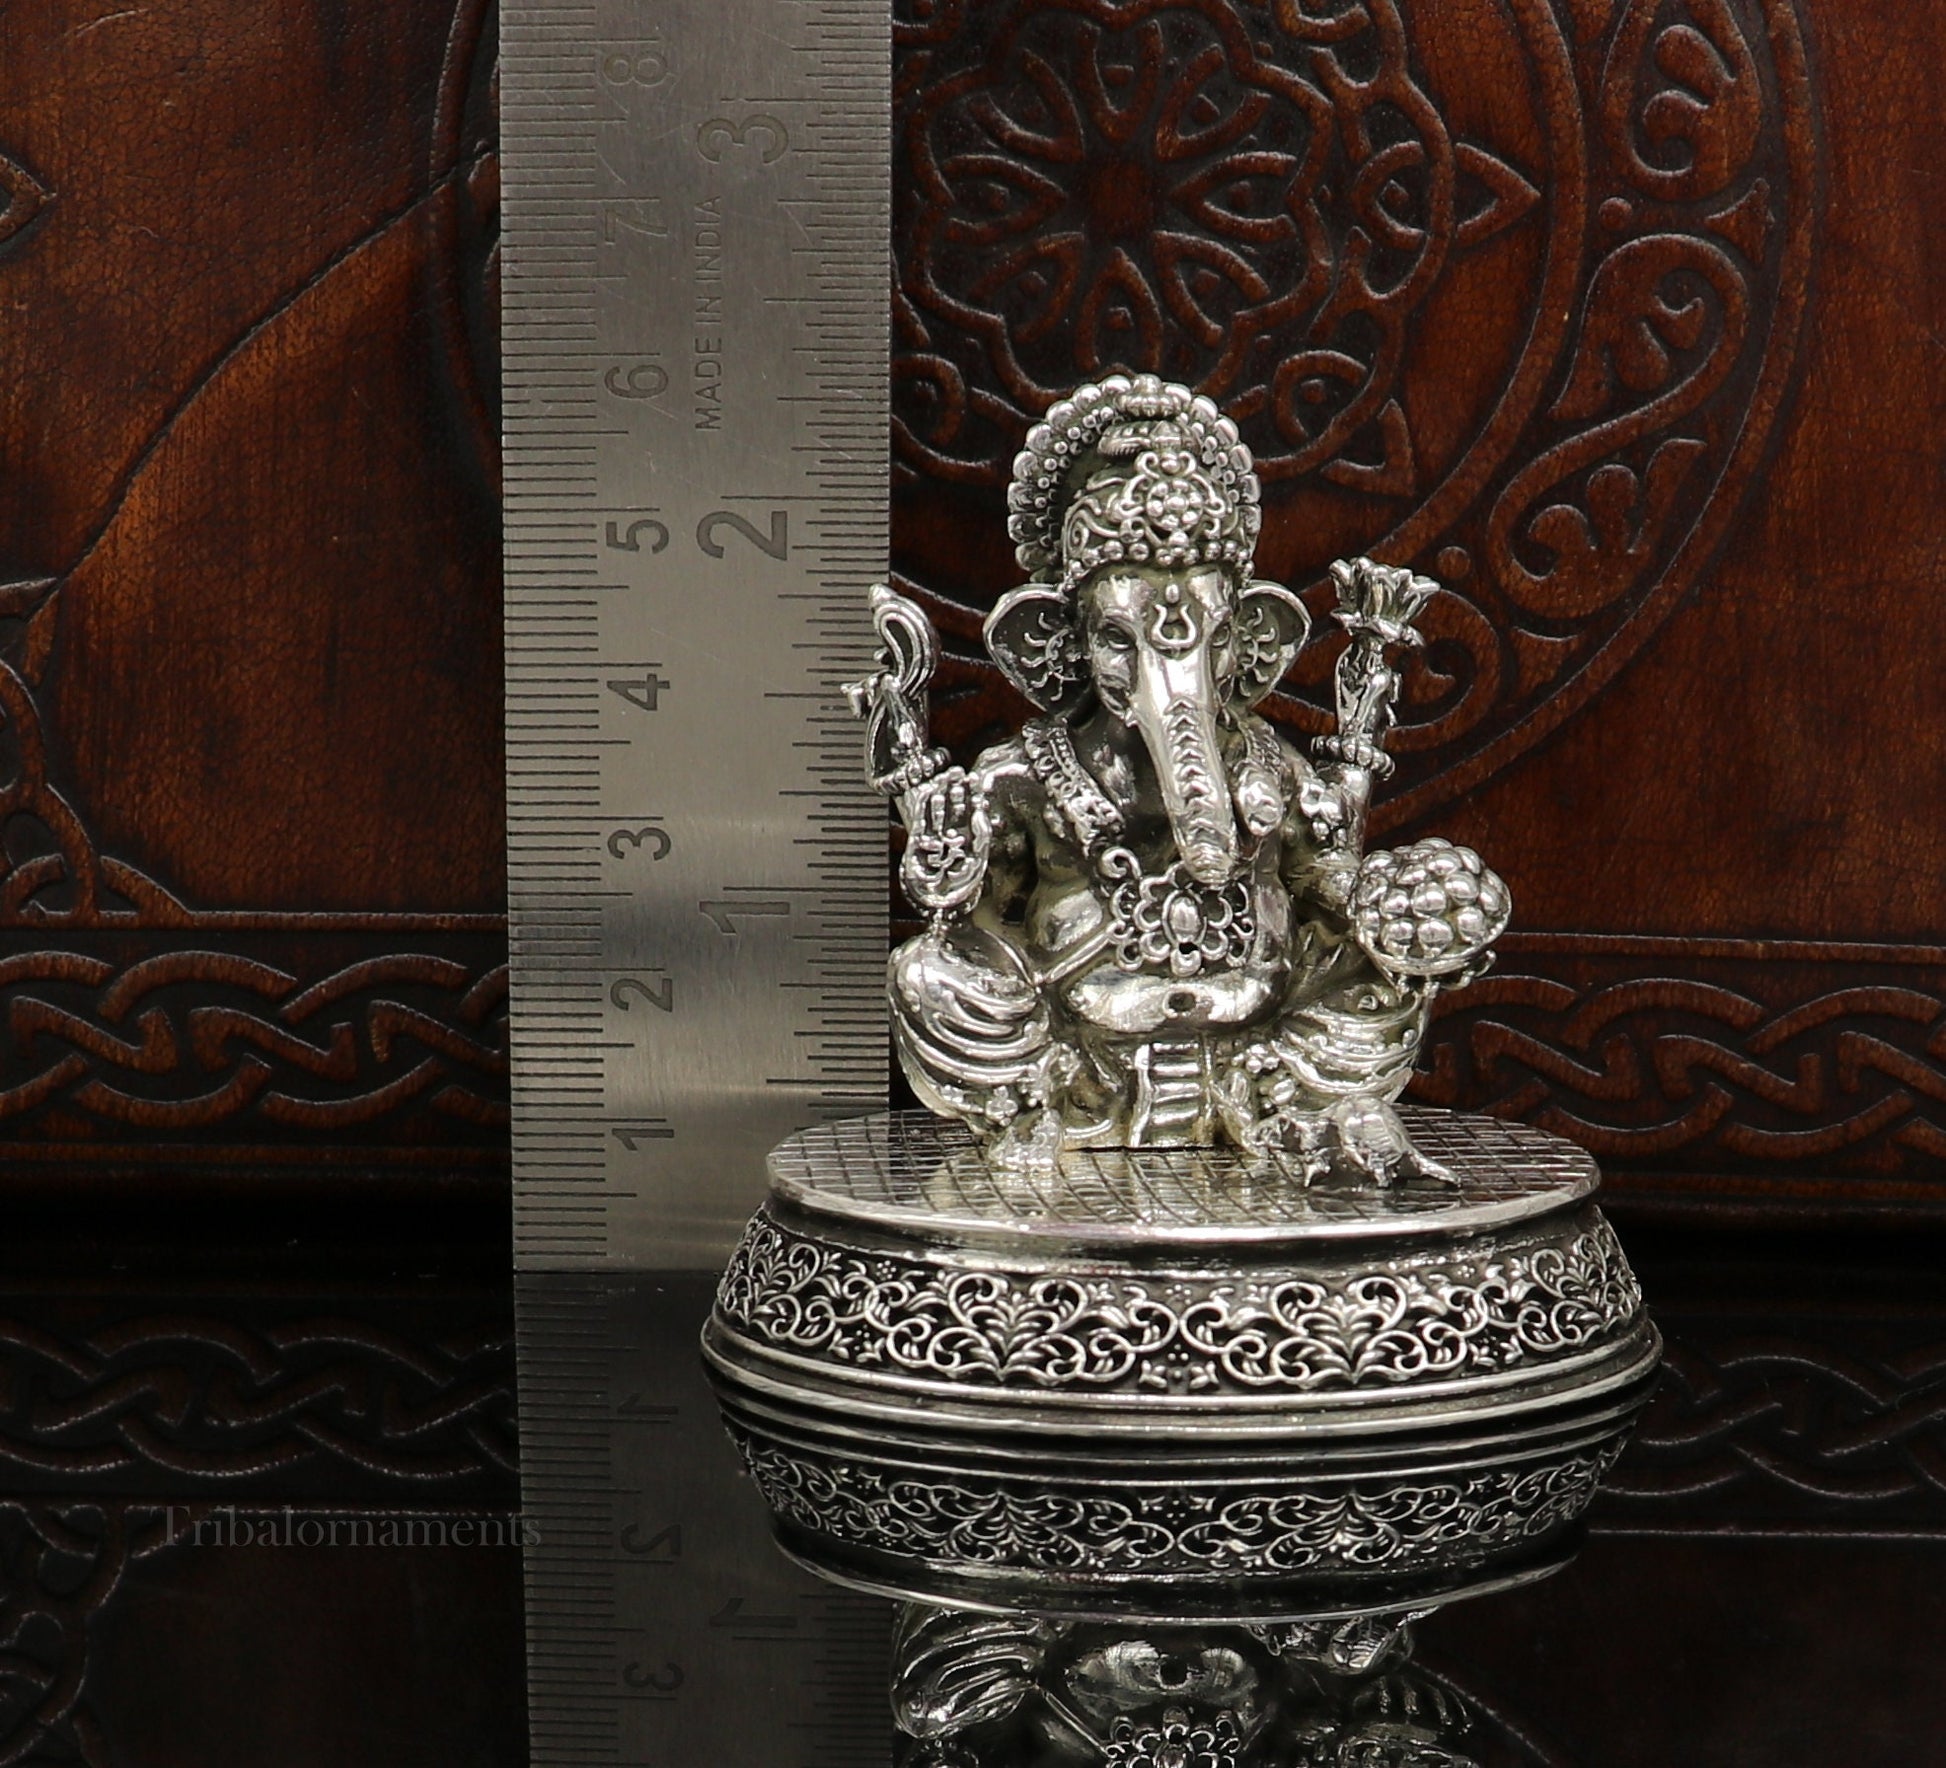 2.3" heights 925 Sterling silver handmade Hindu idols Laxmi, Ganesha and Saraswati statue, puja article figurine, best Diwali puja  art - TRIBAL ORNAMENTS